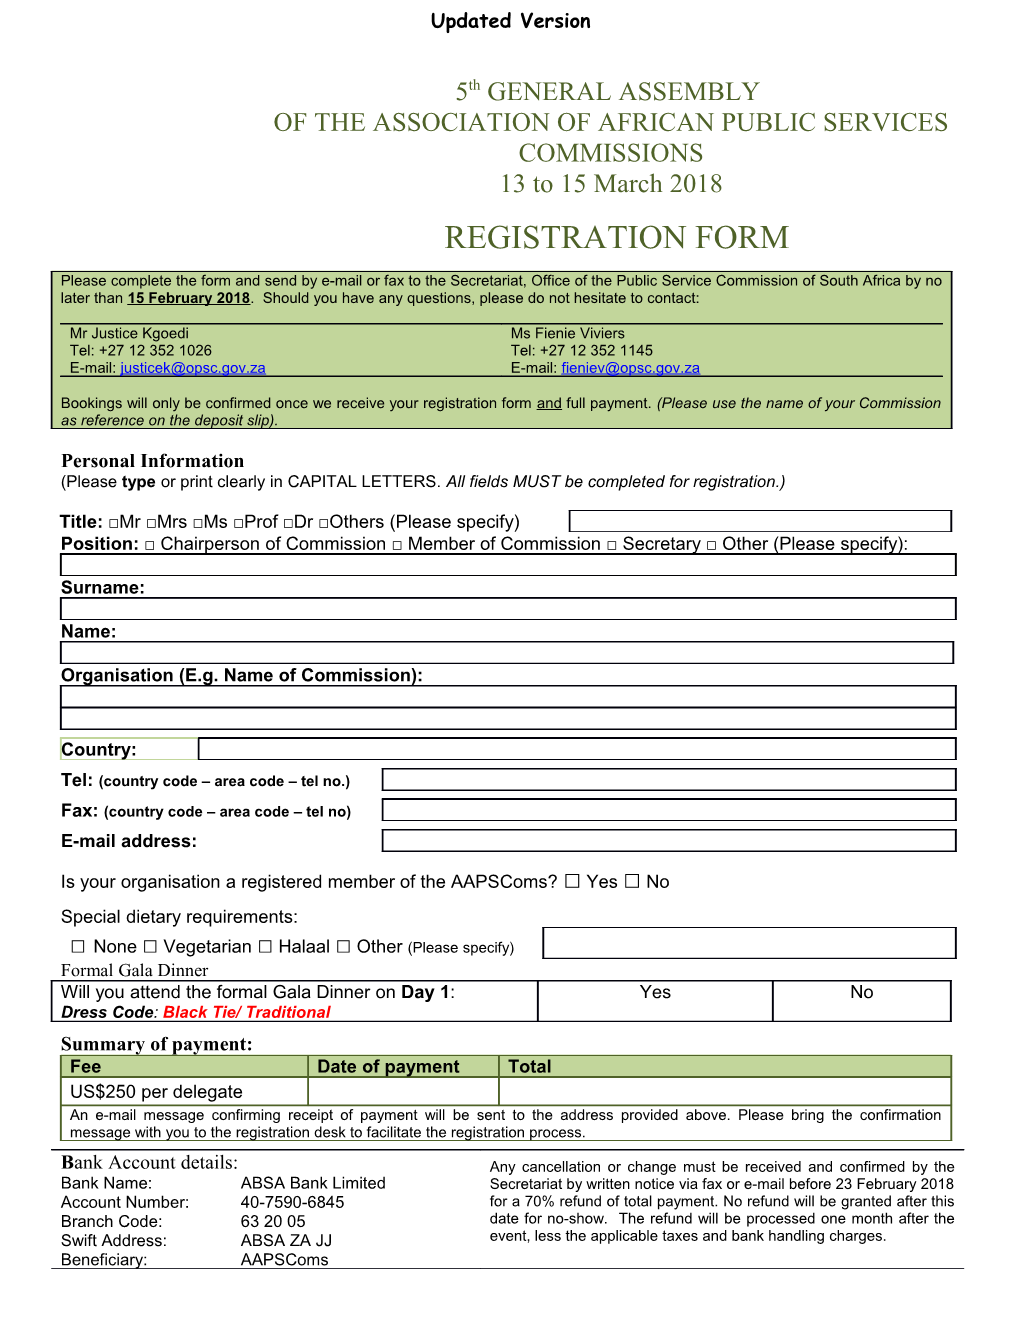 IMFO Conference Registration Form